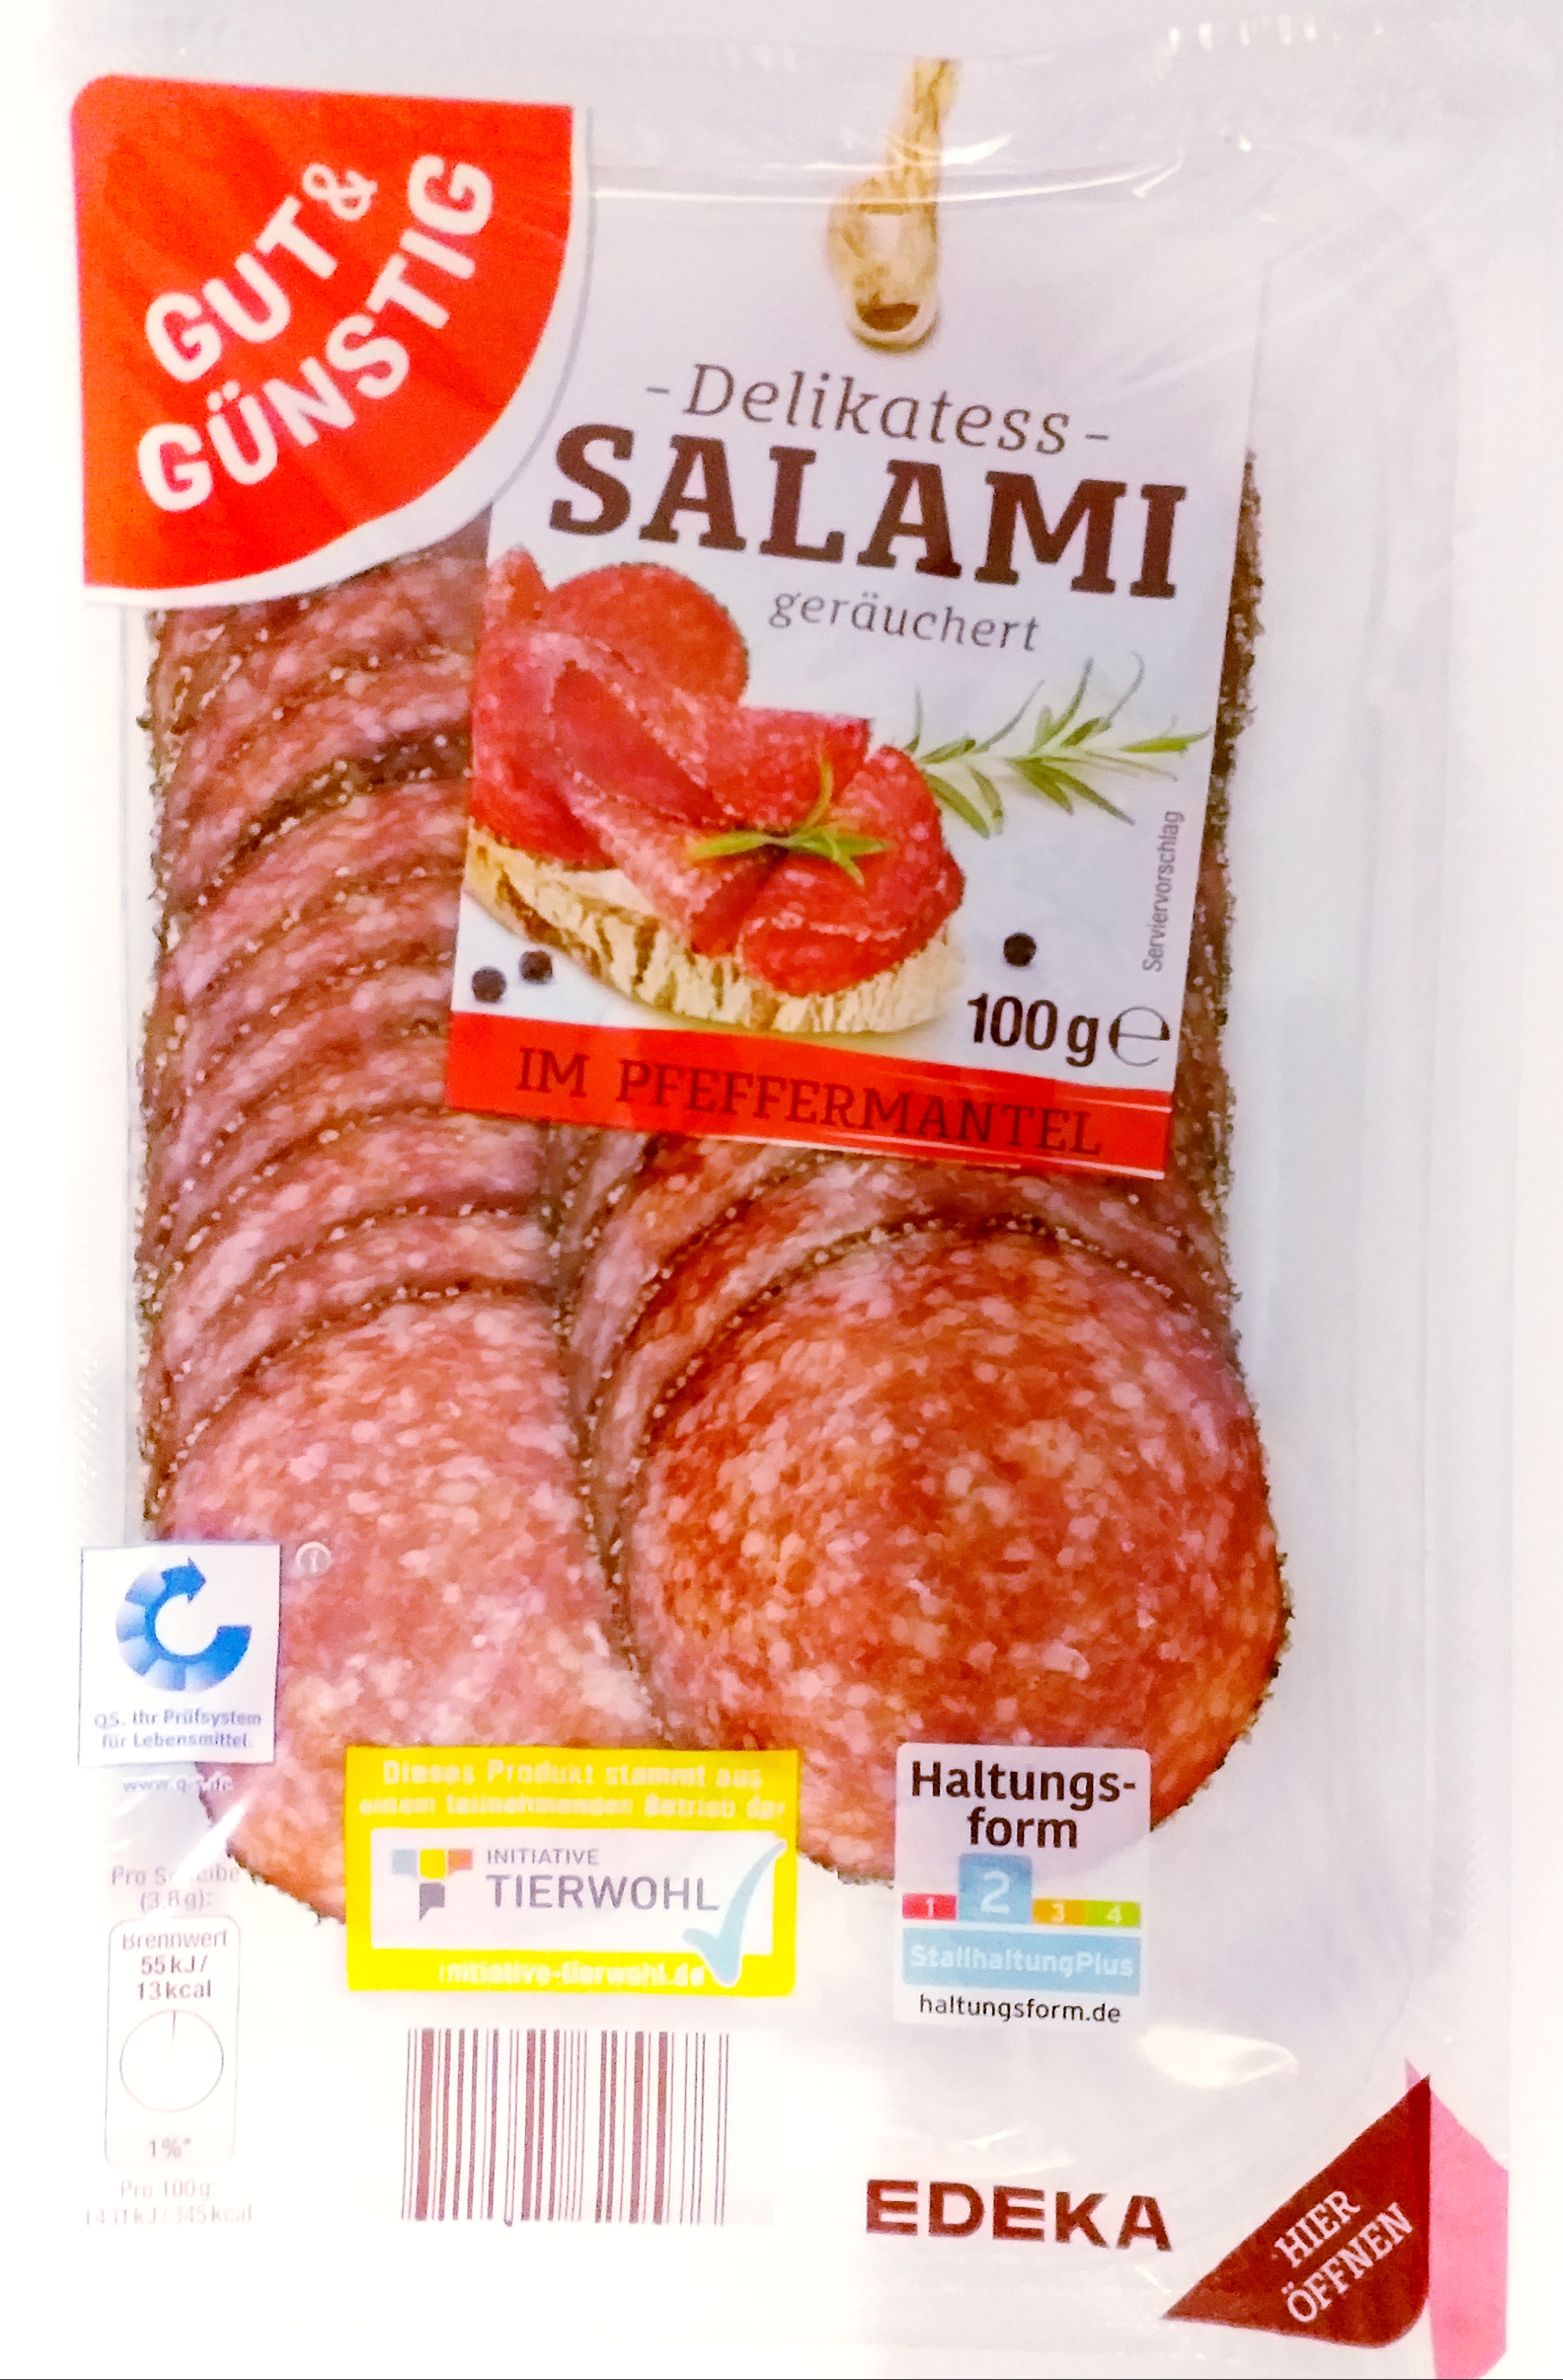 G&G Salami im Pfeffermantel 100g QS